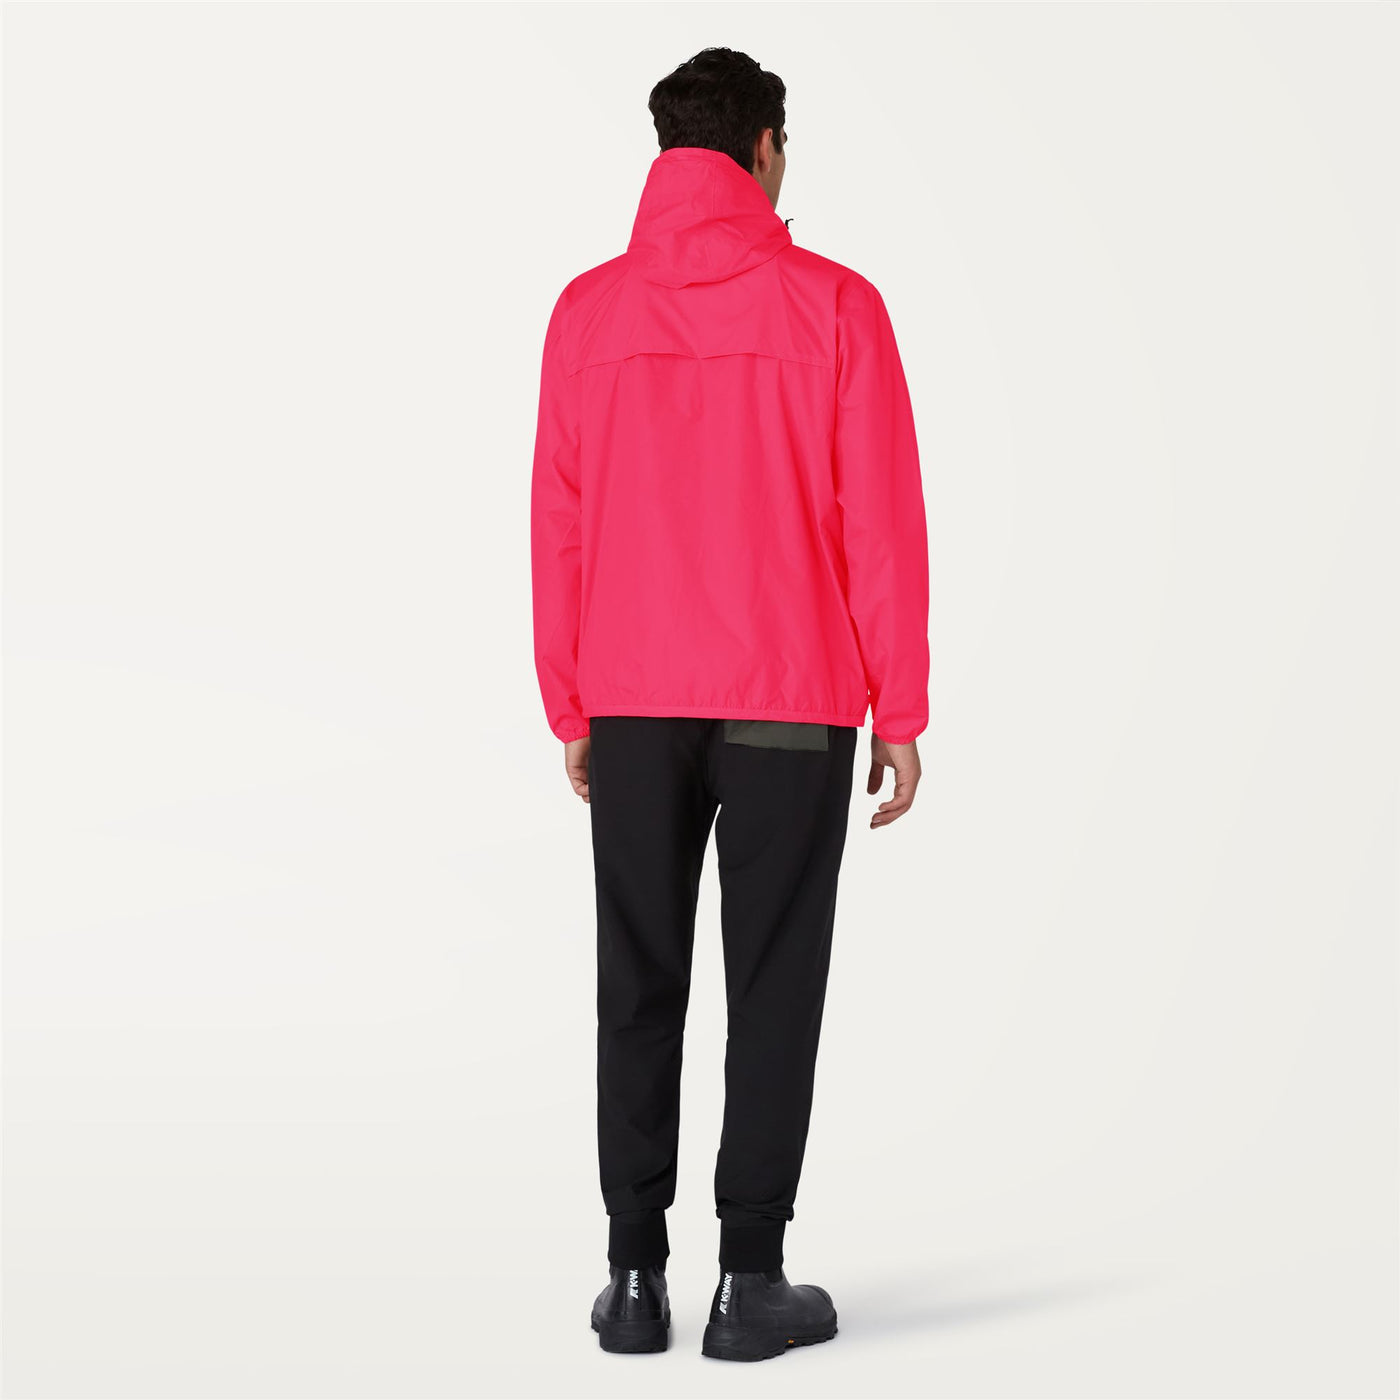 Claude - Unisex Packable Full Zip Waterproof Rain Jacket in Pink Intense